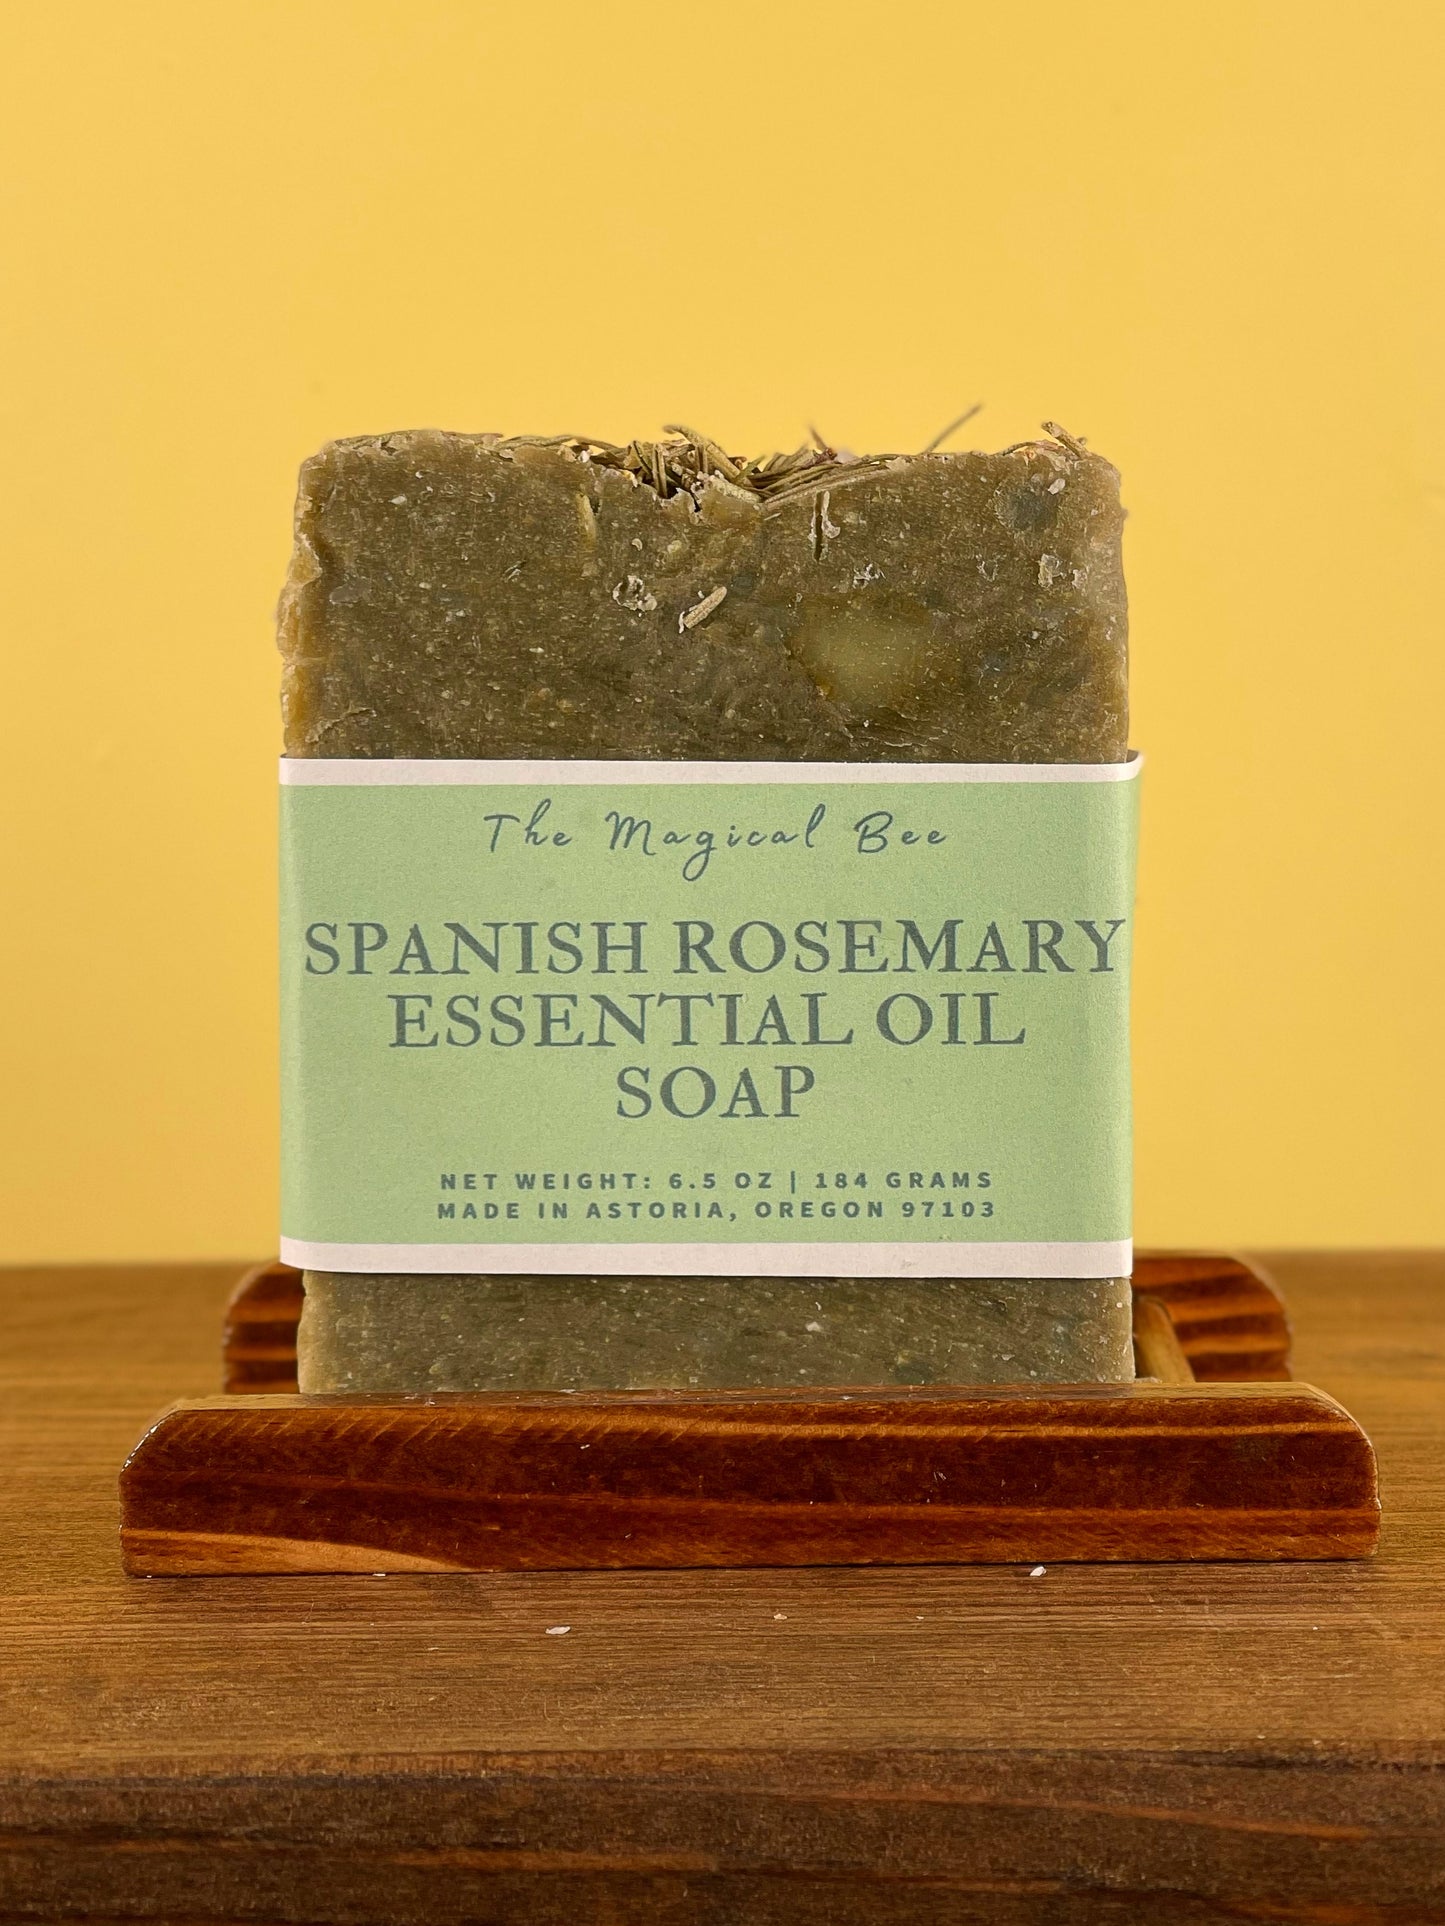 Spanish Rosemary Essential Oil Soap